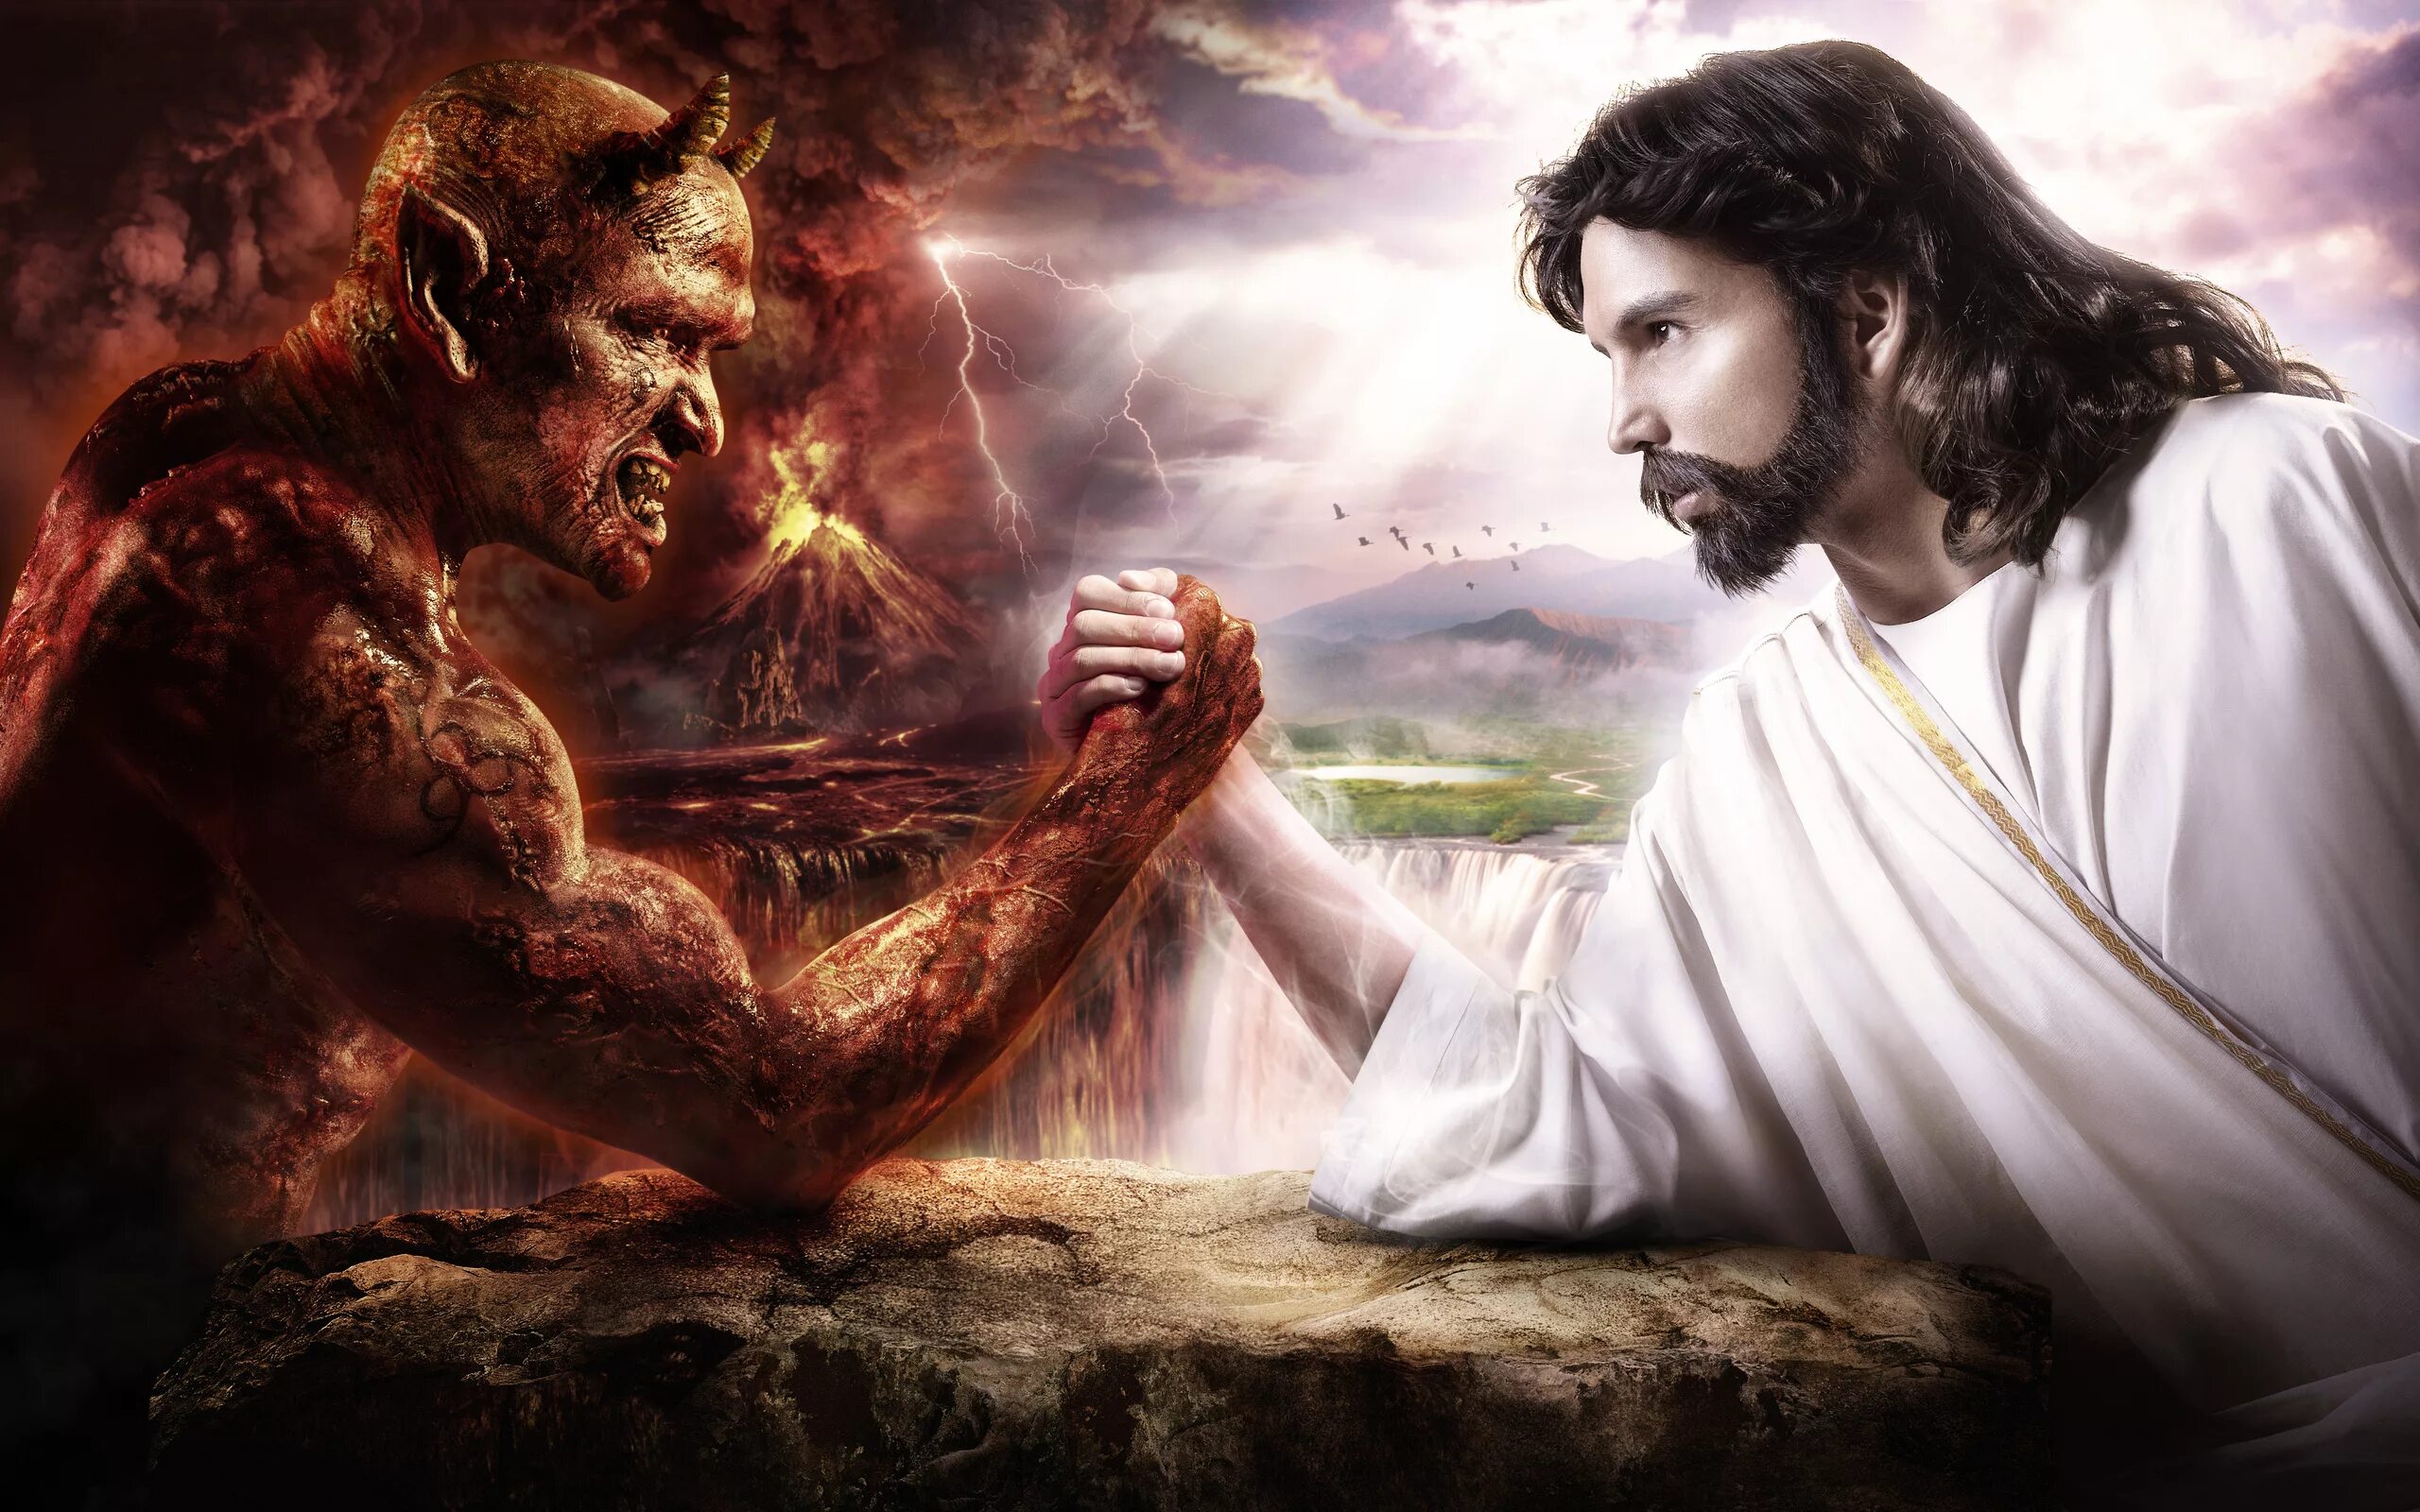 Битва за душу человека. Иисус Христос против сатаны. Дьявол Люцифер против Иисуса Христа. Иисус против дьявола картина.